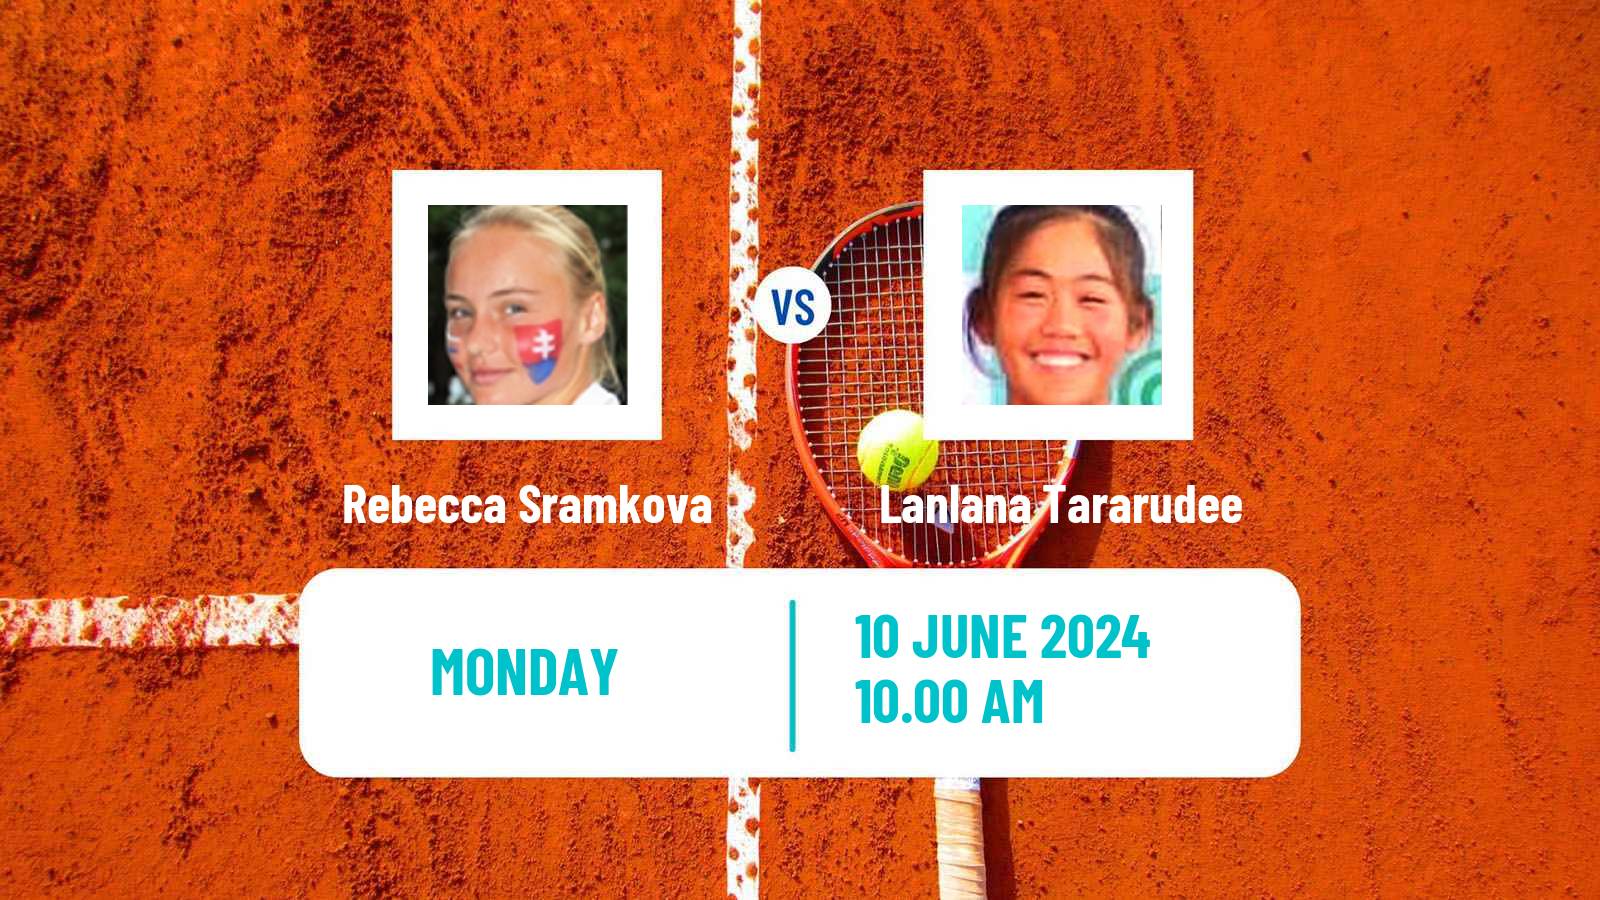 Tennis Valencia Challenger Women Rebecca Sramkova - Lanlana Tararudee